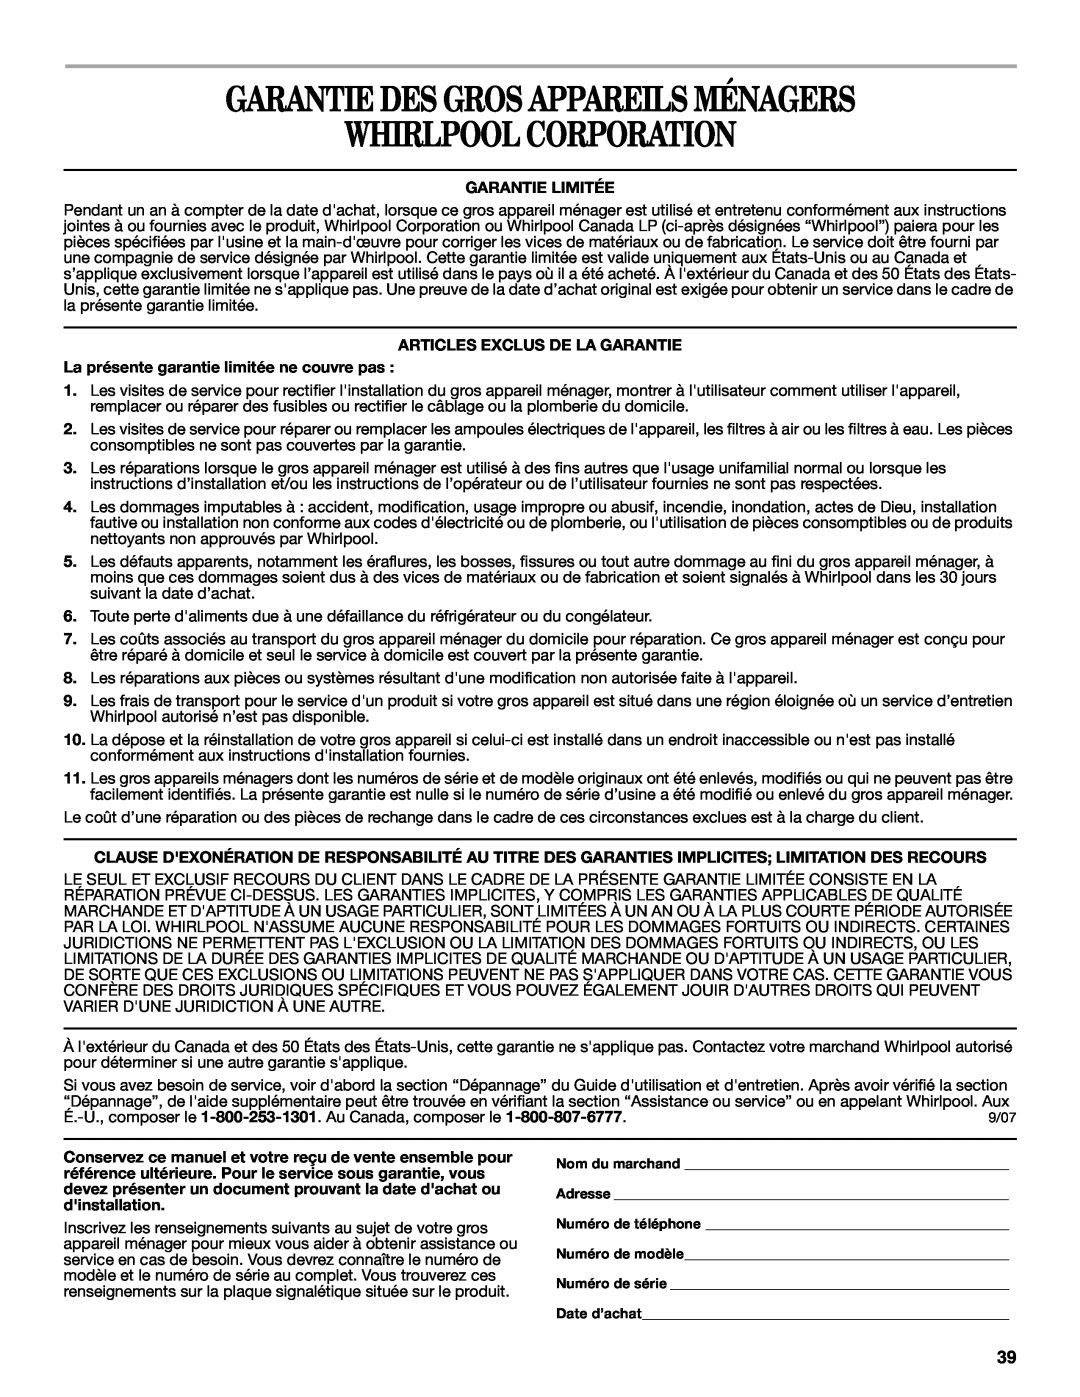 Whirlpool GY397LXUS manual Garantie Des Gros Appareils Ménagers, Whirlpool Corporation, Garantie Limitée 